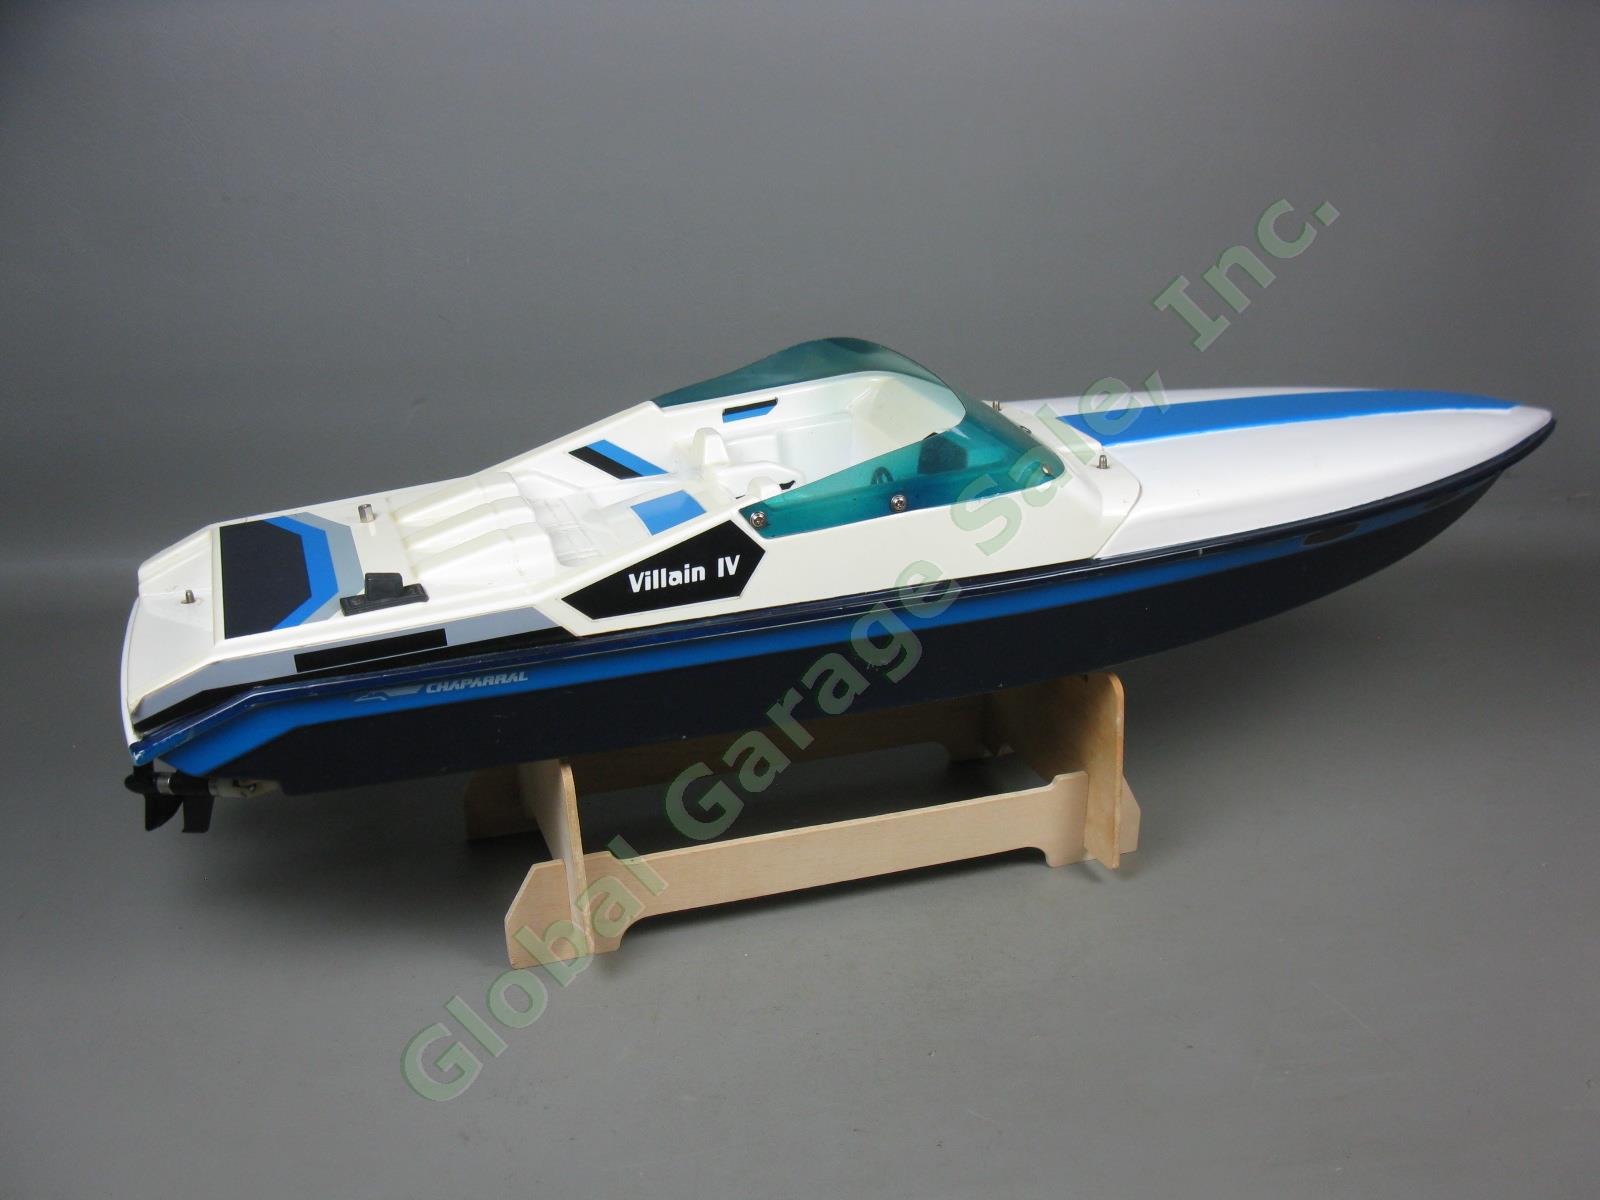 Vtg 1989 Traxxas Chapparal Villain IV 1/12 Dual Twin Motor RC Boat #1508 1